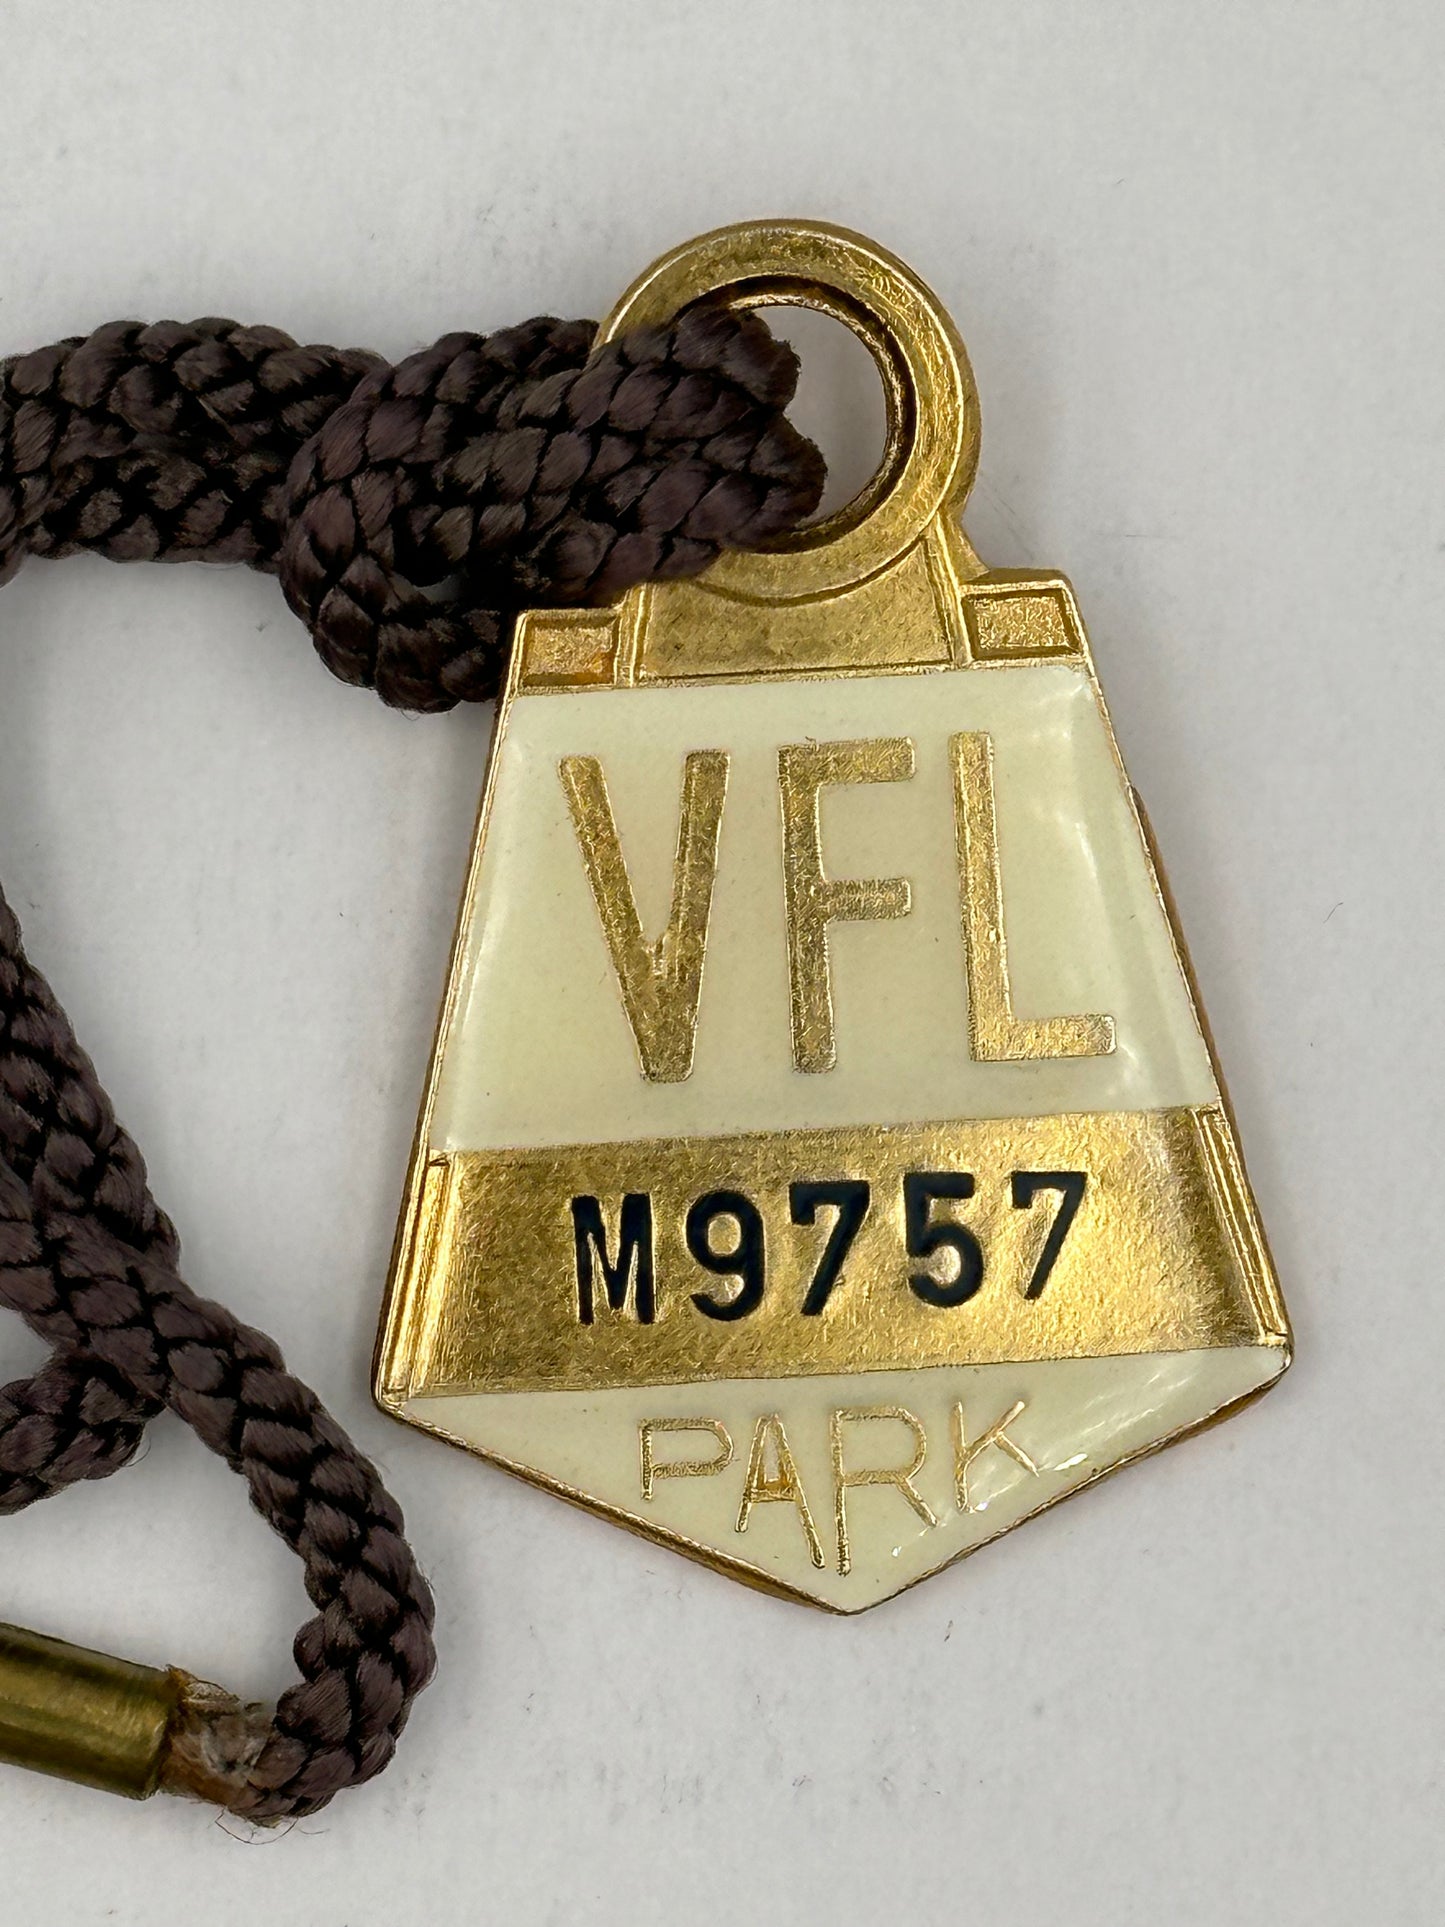 Vintage 1975 VFL Park Enamel and metal Membership Medallion Badge